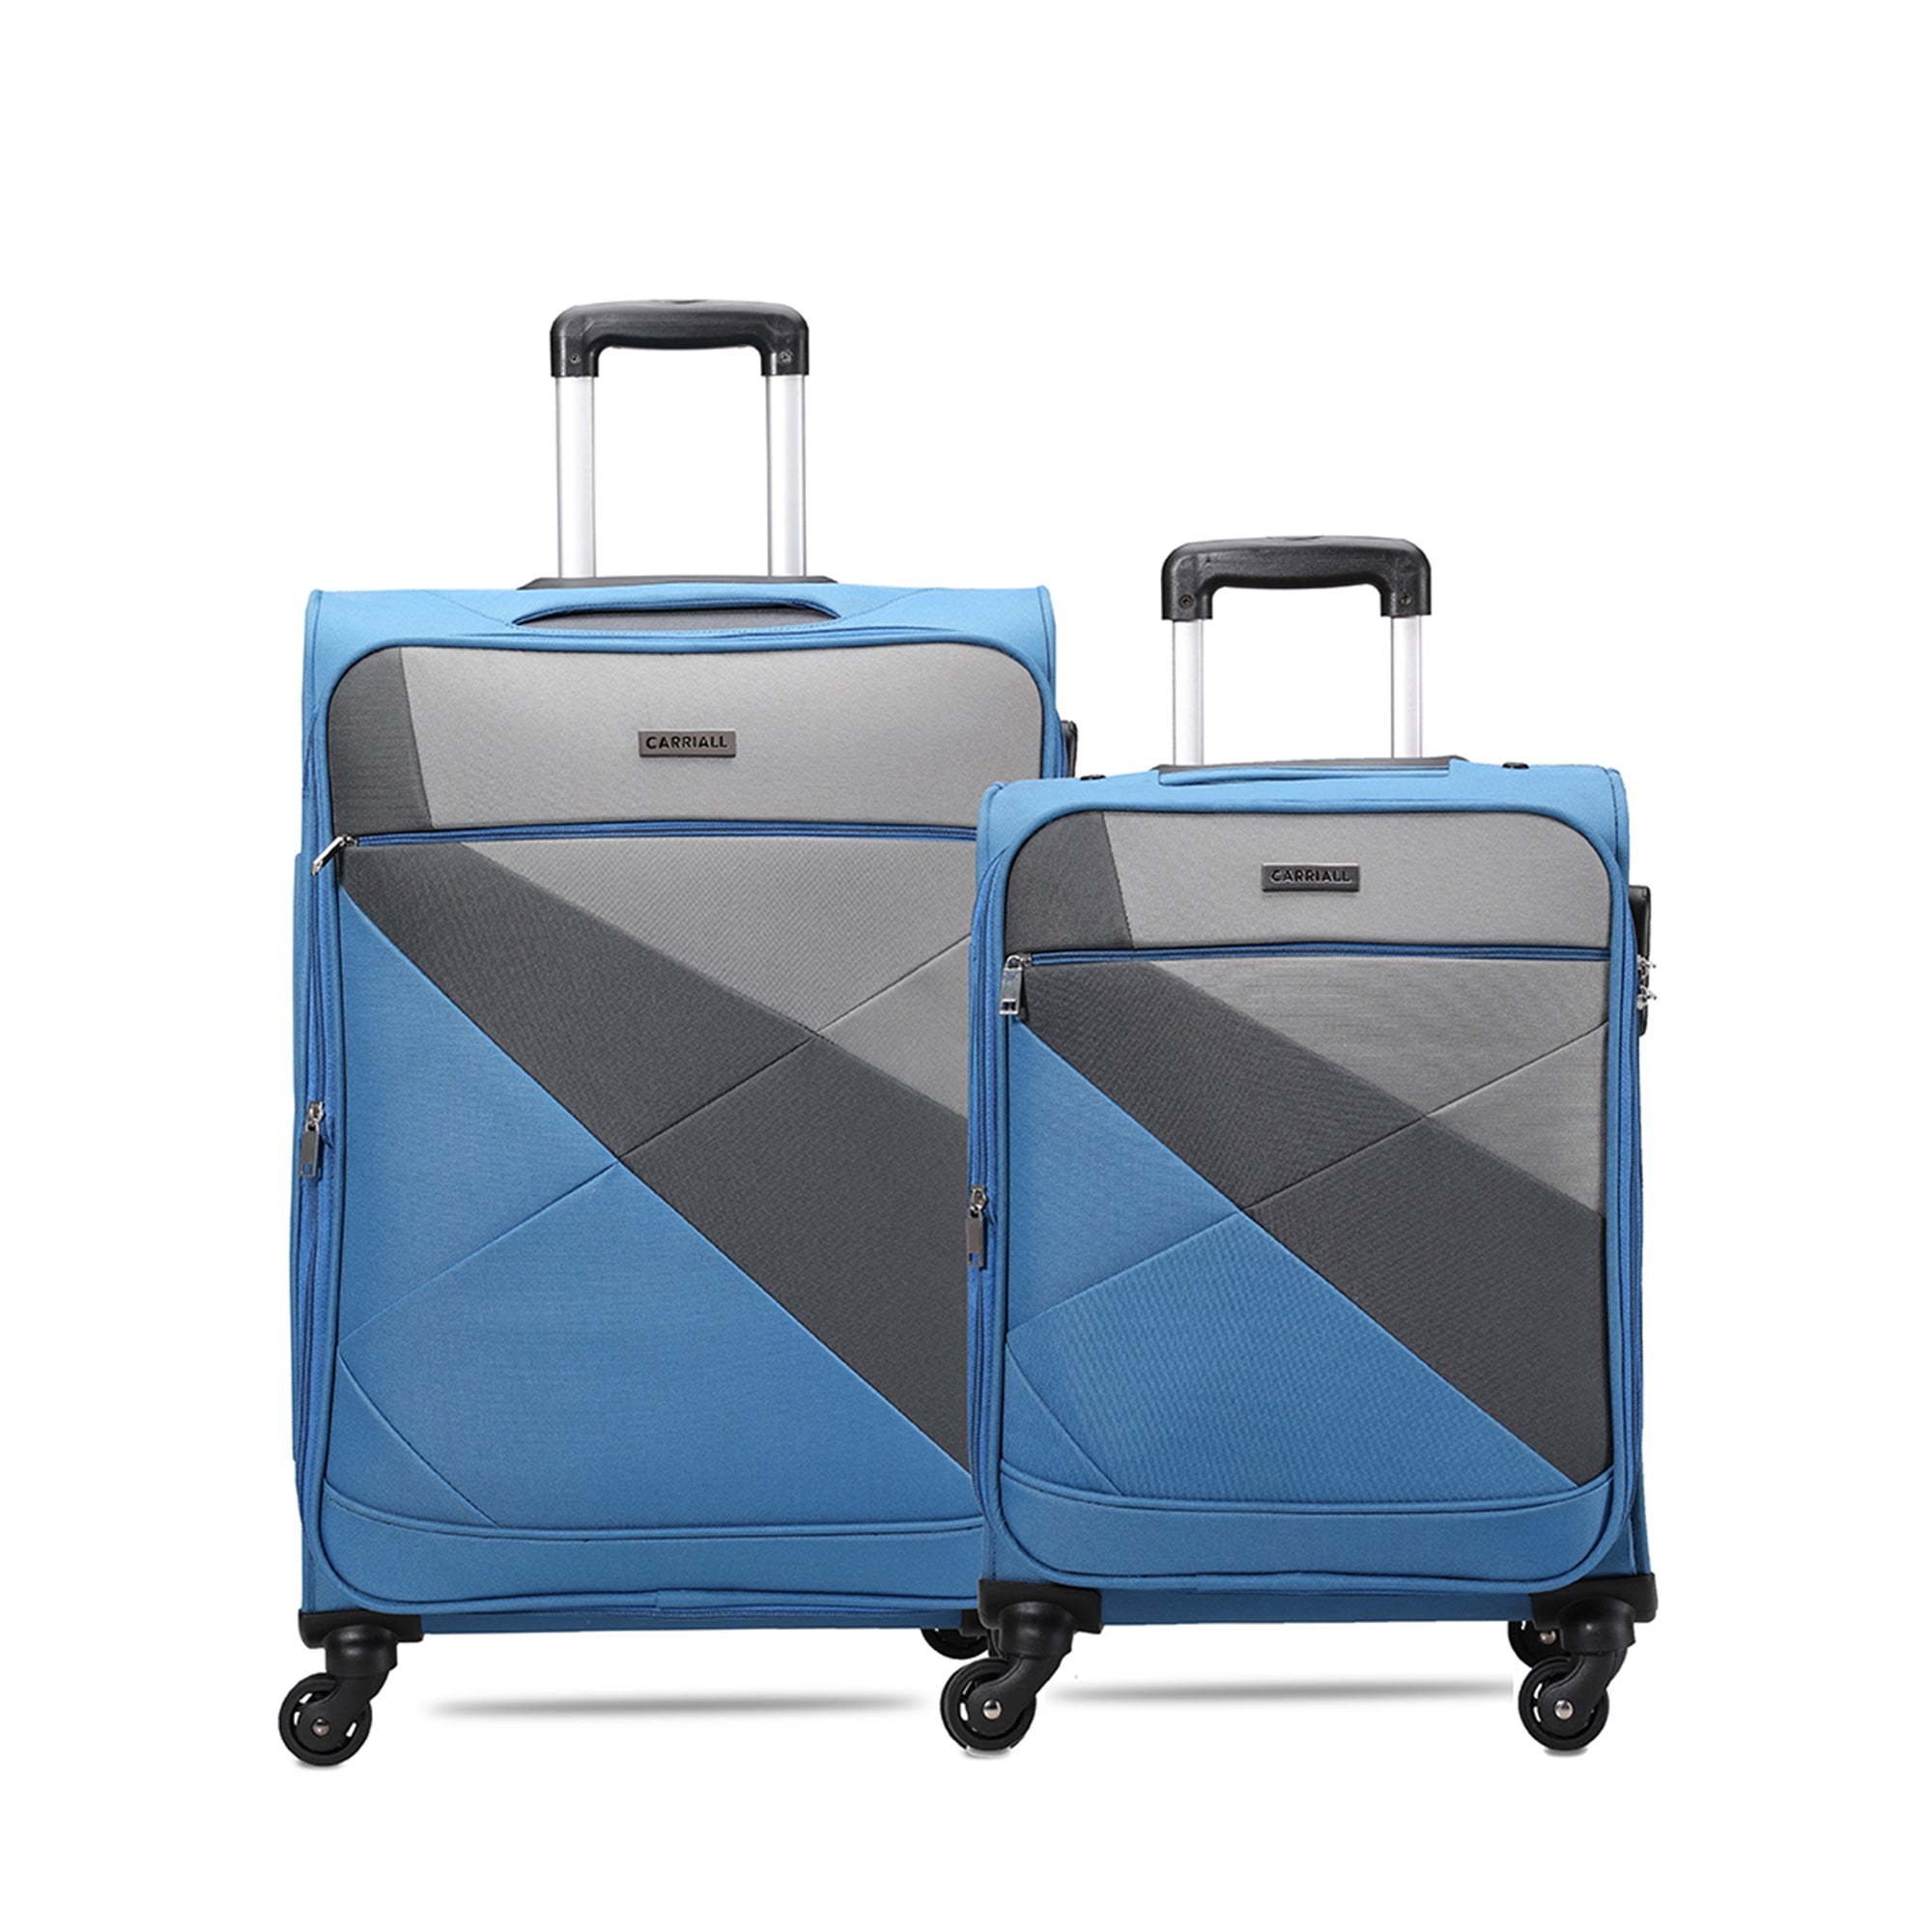 Vista Luggage Set of 2